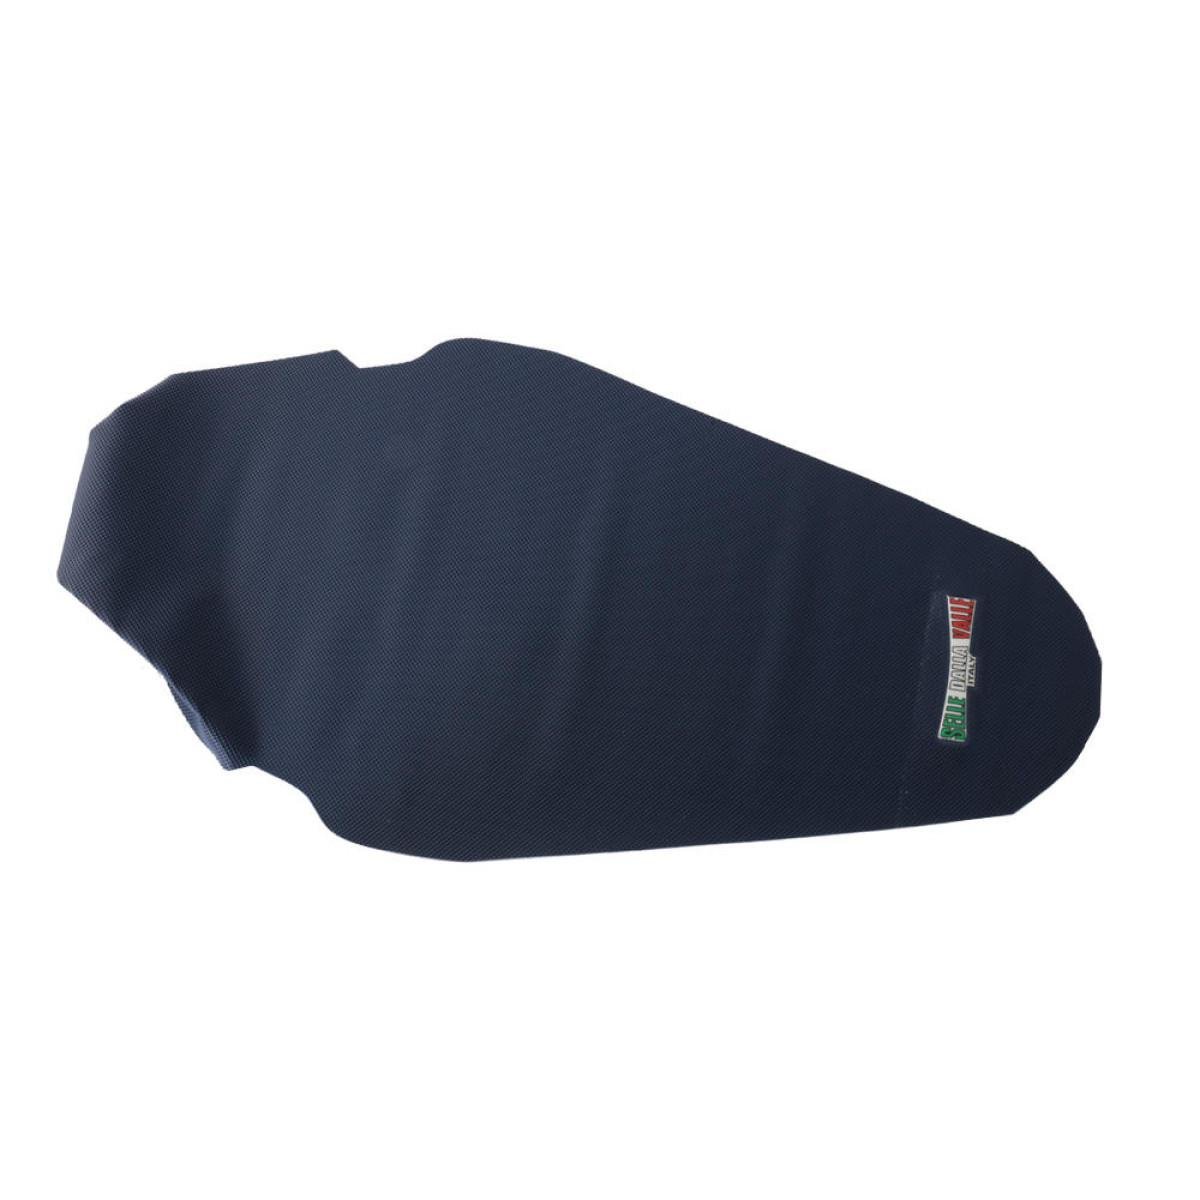 Selle Dalla Valle Seat Cover Super Grip Universal, 80 cm x 49 cm, Blue